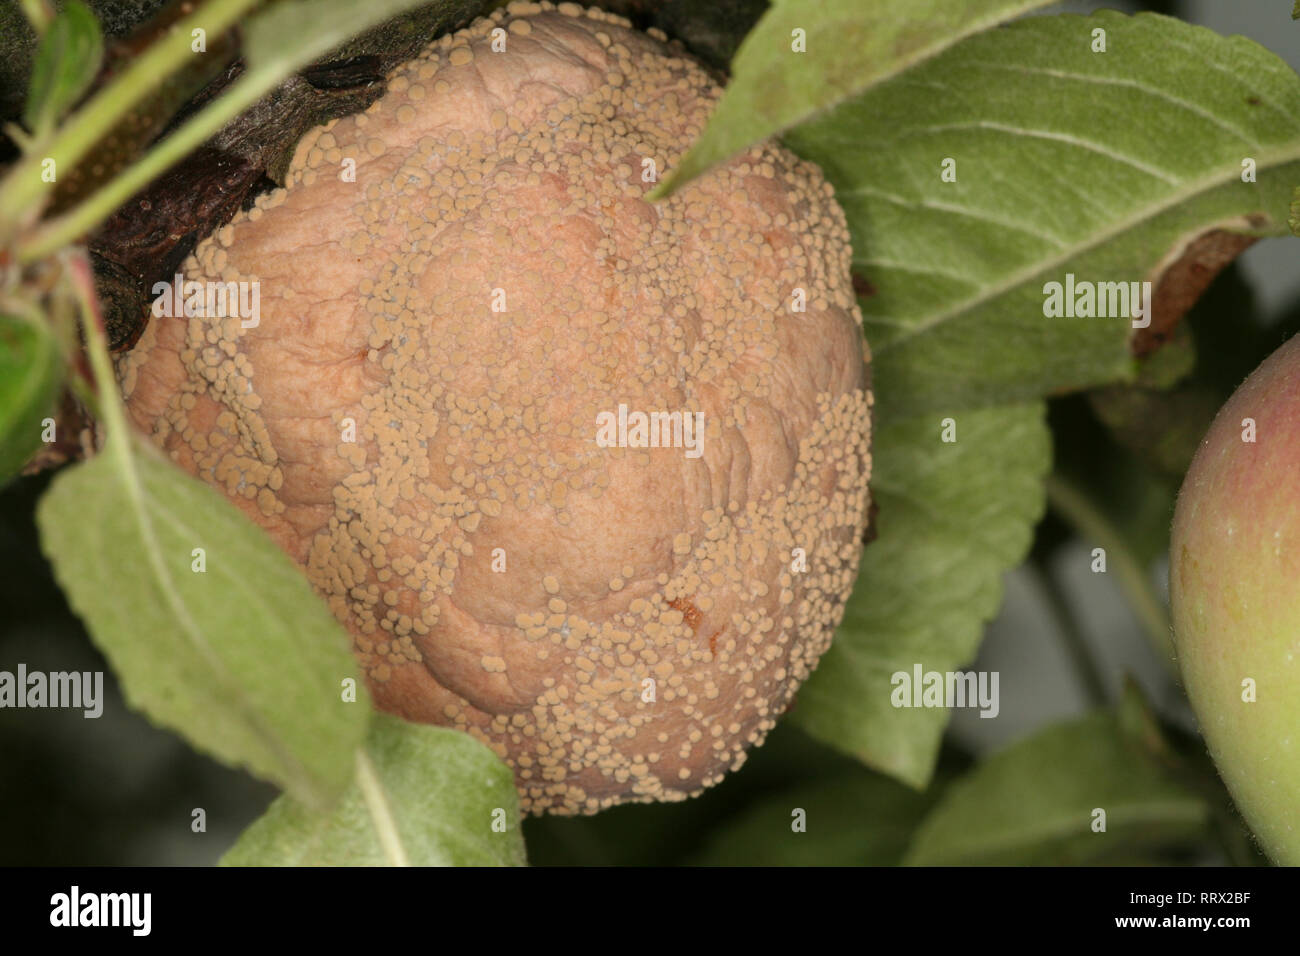 Brown rot of pome trees Monilinia fructigena on apple fruit close-up malus domestica fungal pathogen Stock Photo